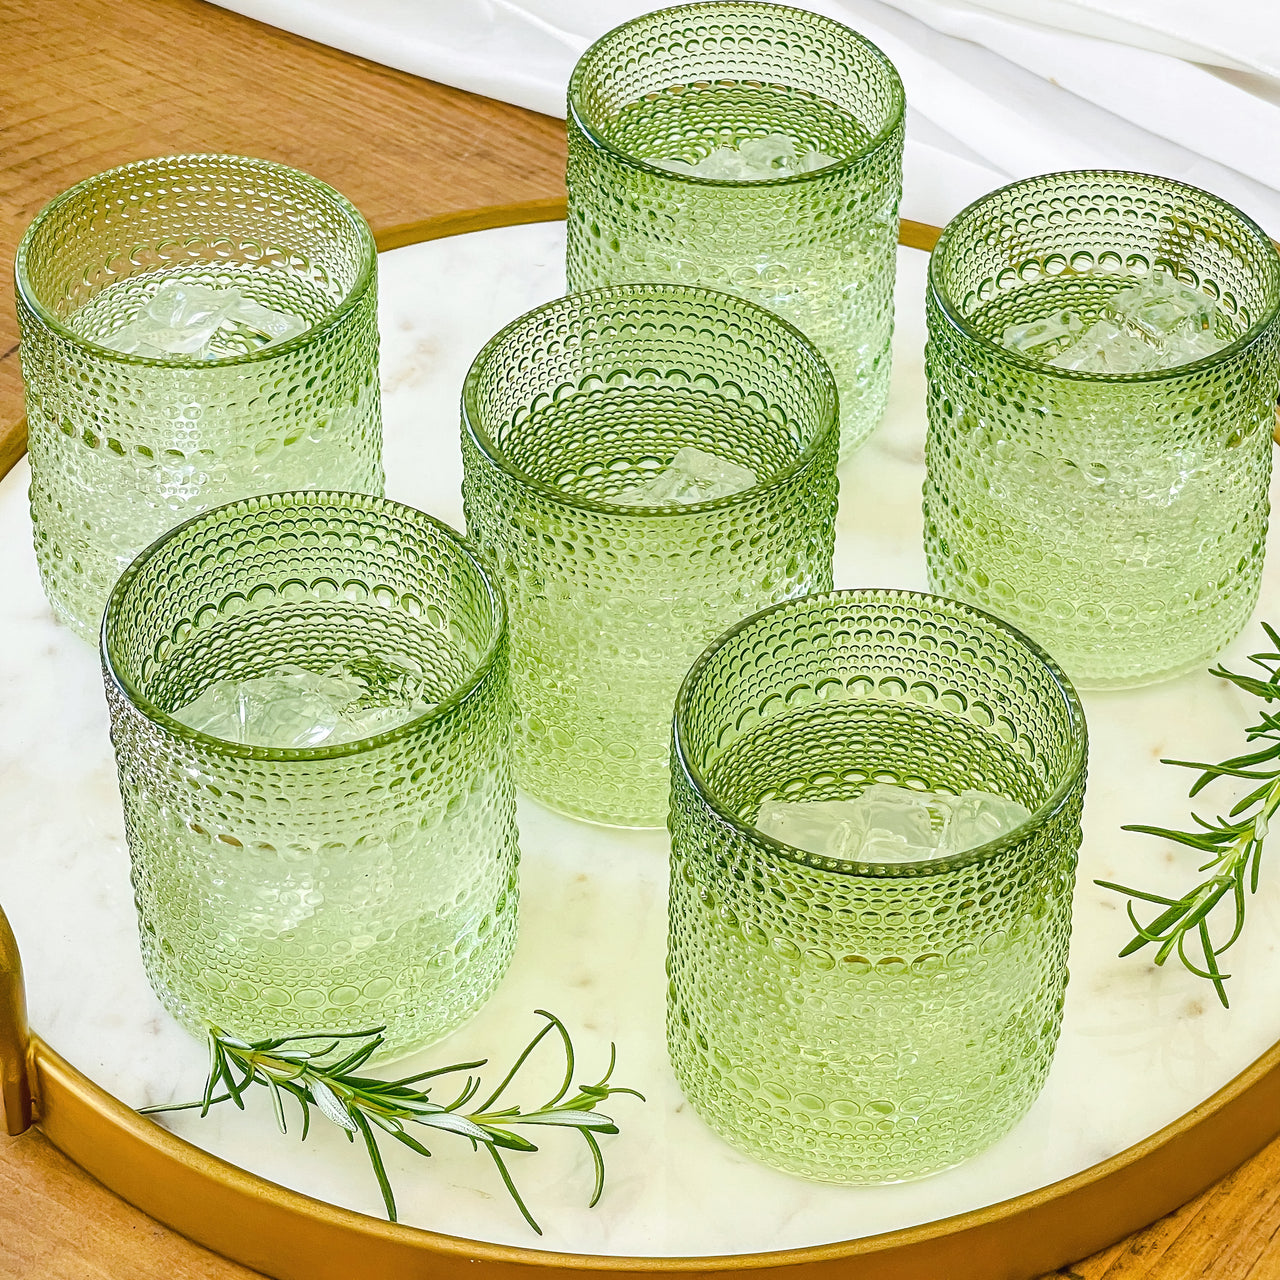 Personalized Old Fashion Mason Jar Drinking Glasses - Set of 4 - Charming  Chick